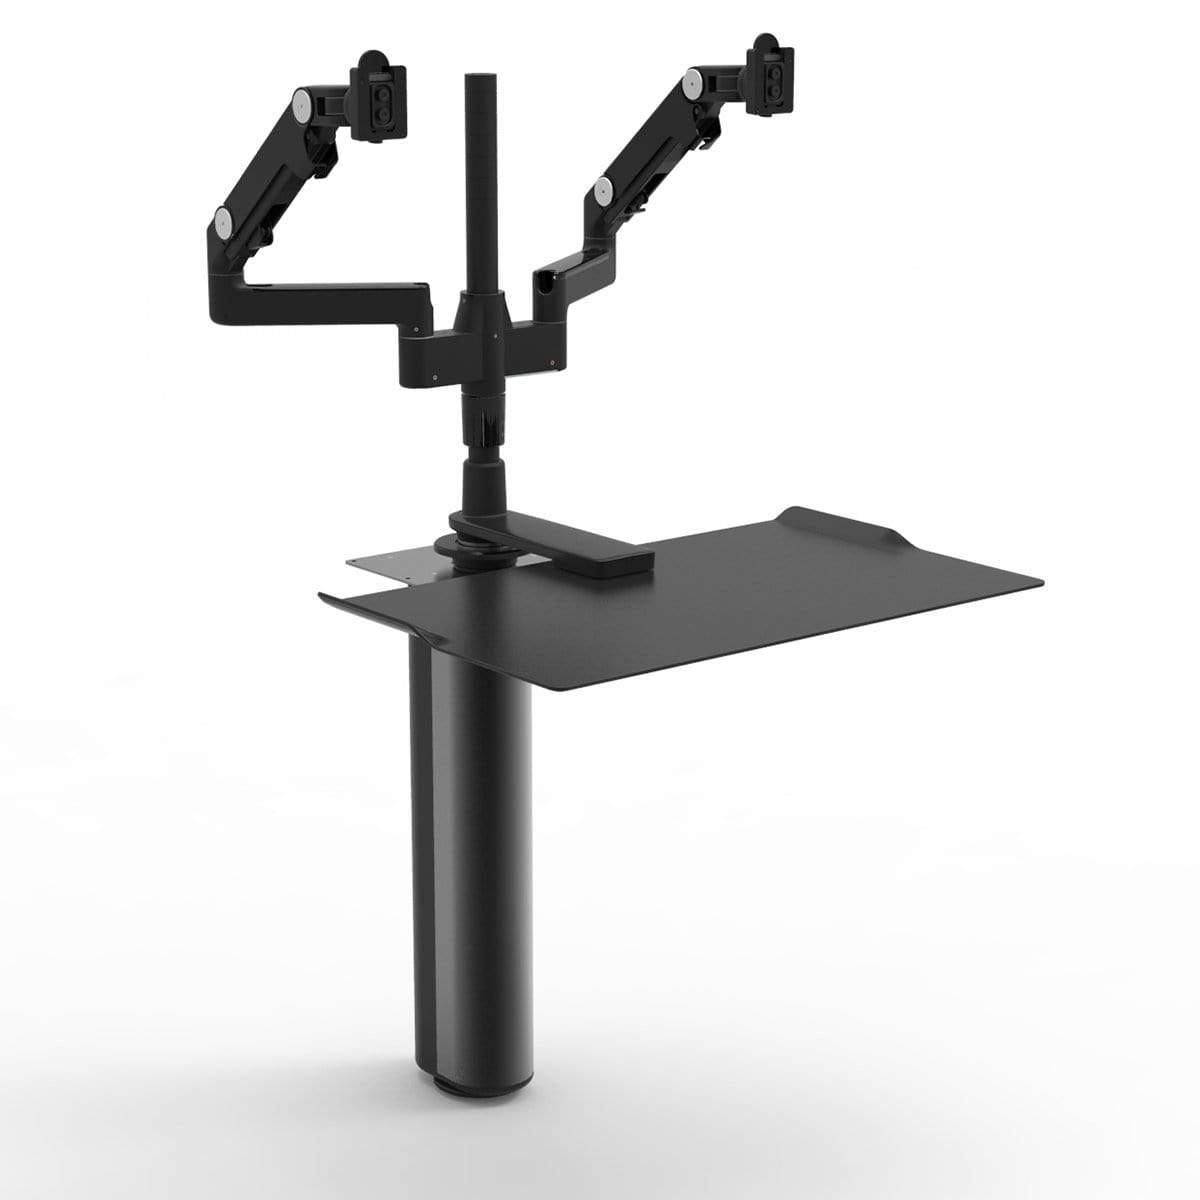 Humanscale Under Desk Black / M/Flex Monitor Arm Mount (Arm Sold Separately) Humanscale QUICKSTAND UNDER DESK